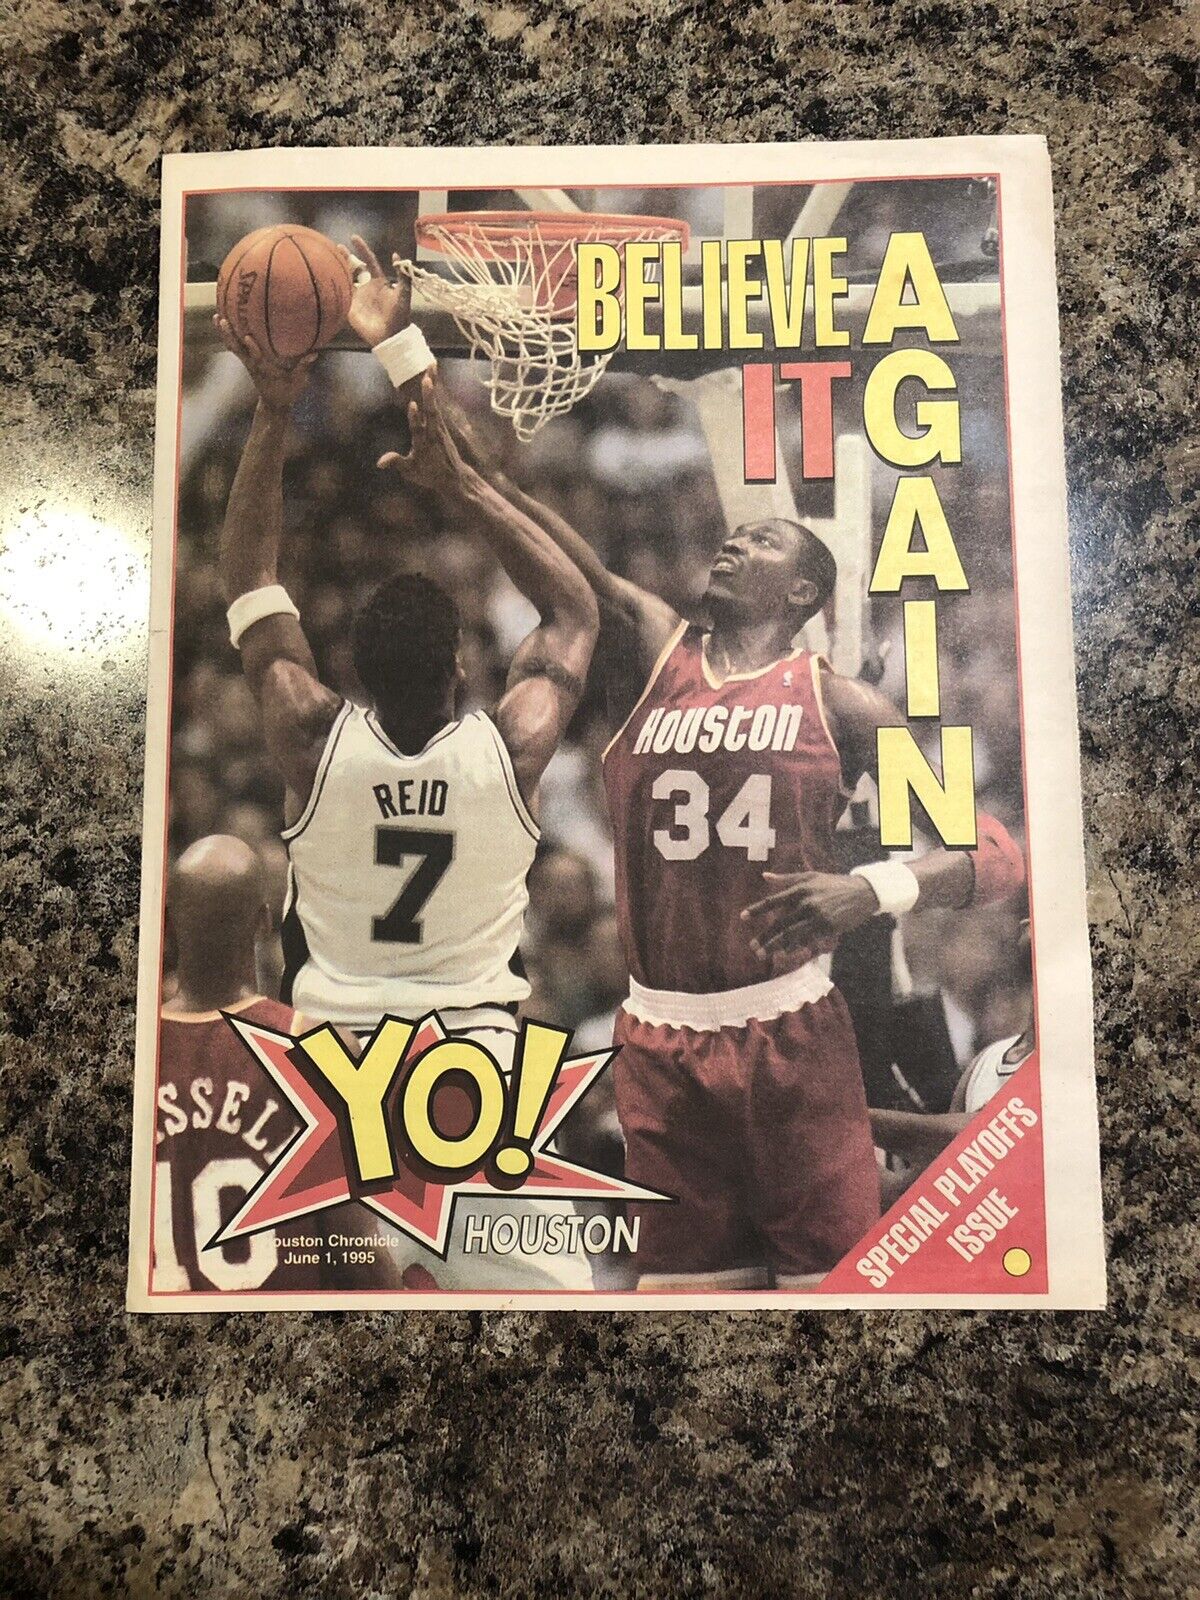 1995 Houston Rockets NBA Playoffs Preview Newspaper.  Hakeem Olajuwon